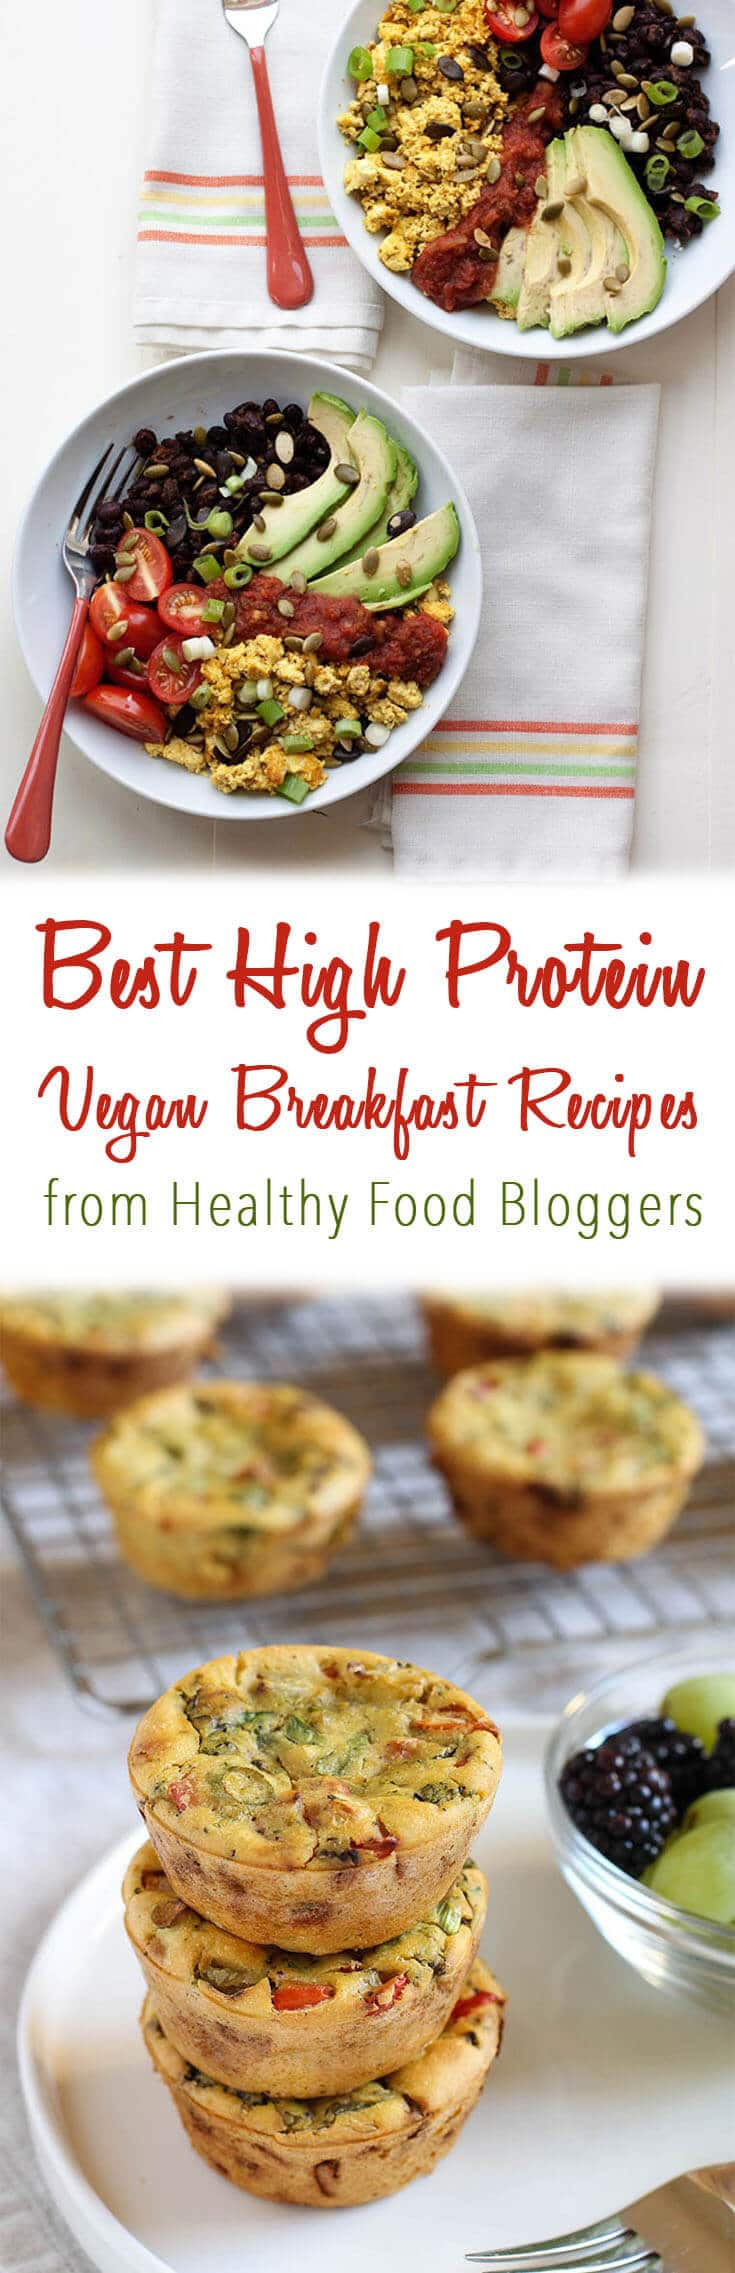 High Protein Vegetarian Breakfast
 Best High Protein Vegan Breakfast Recipes from Healthy